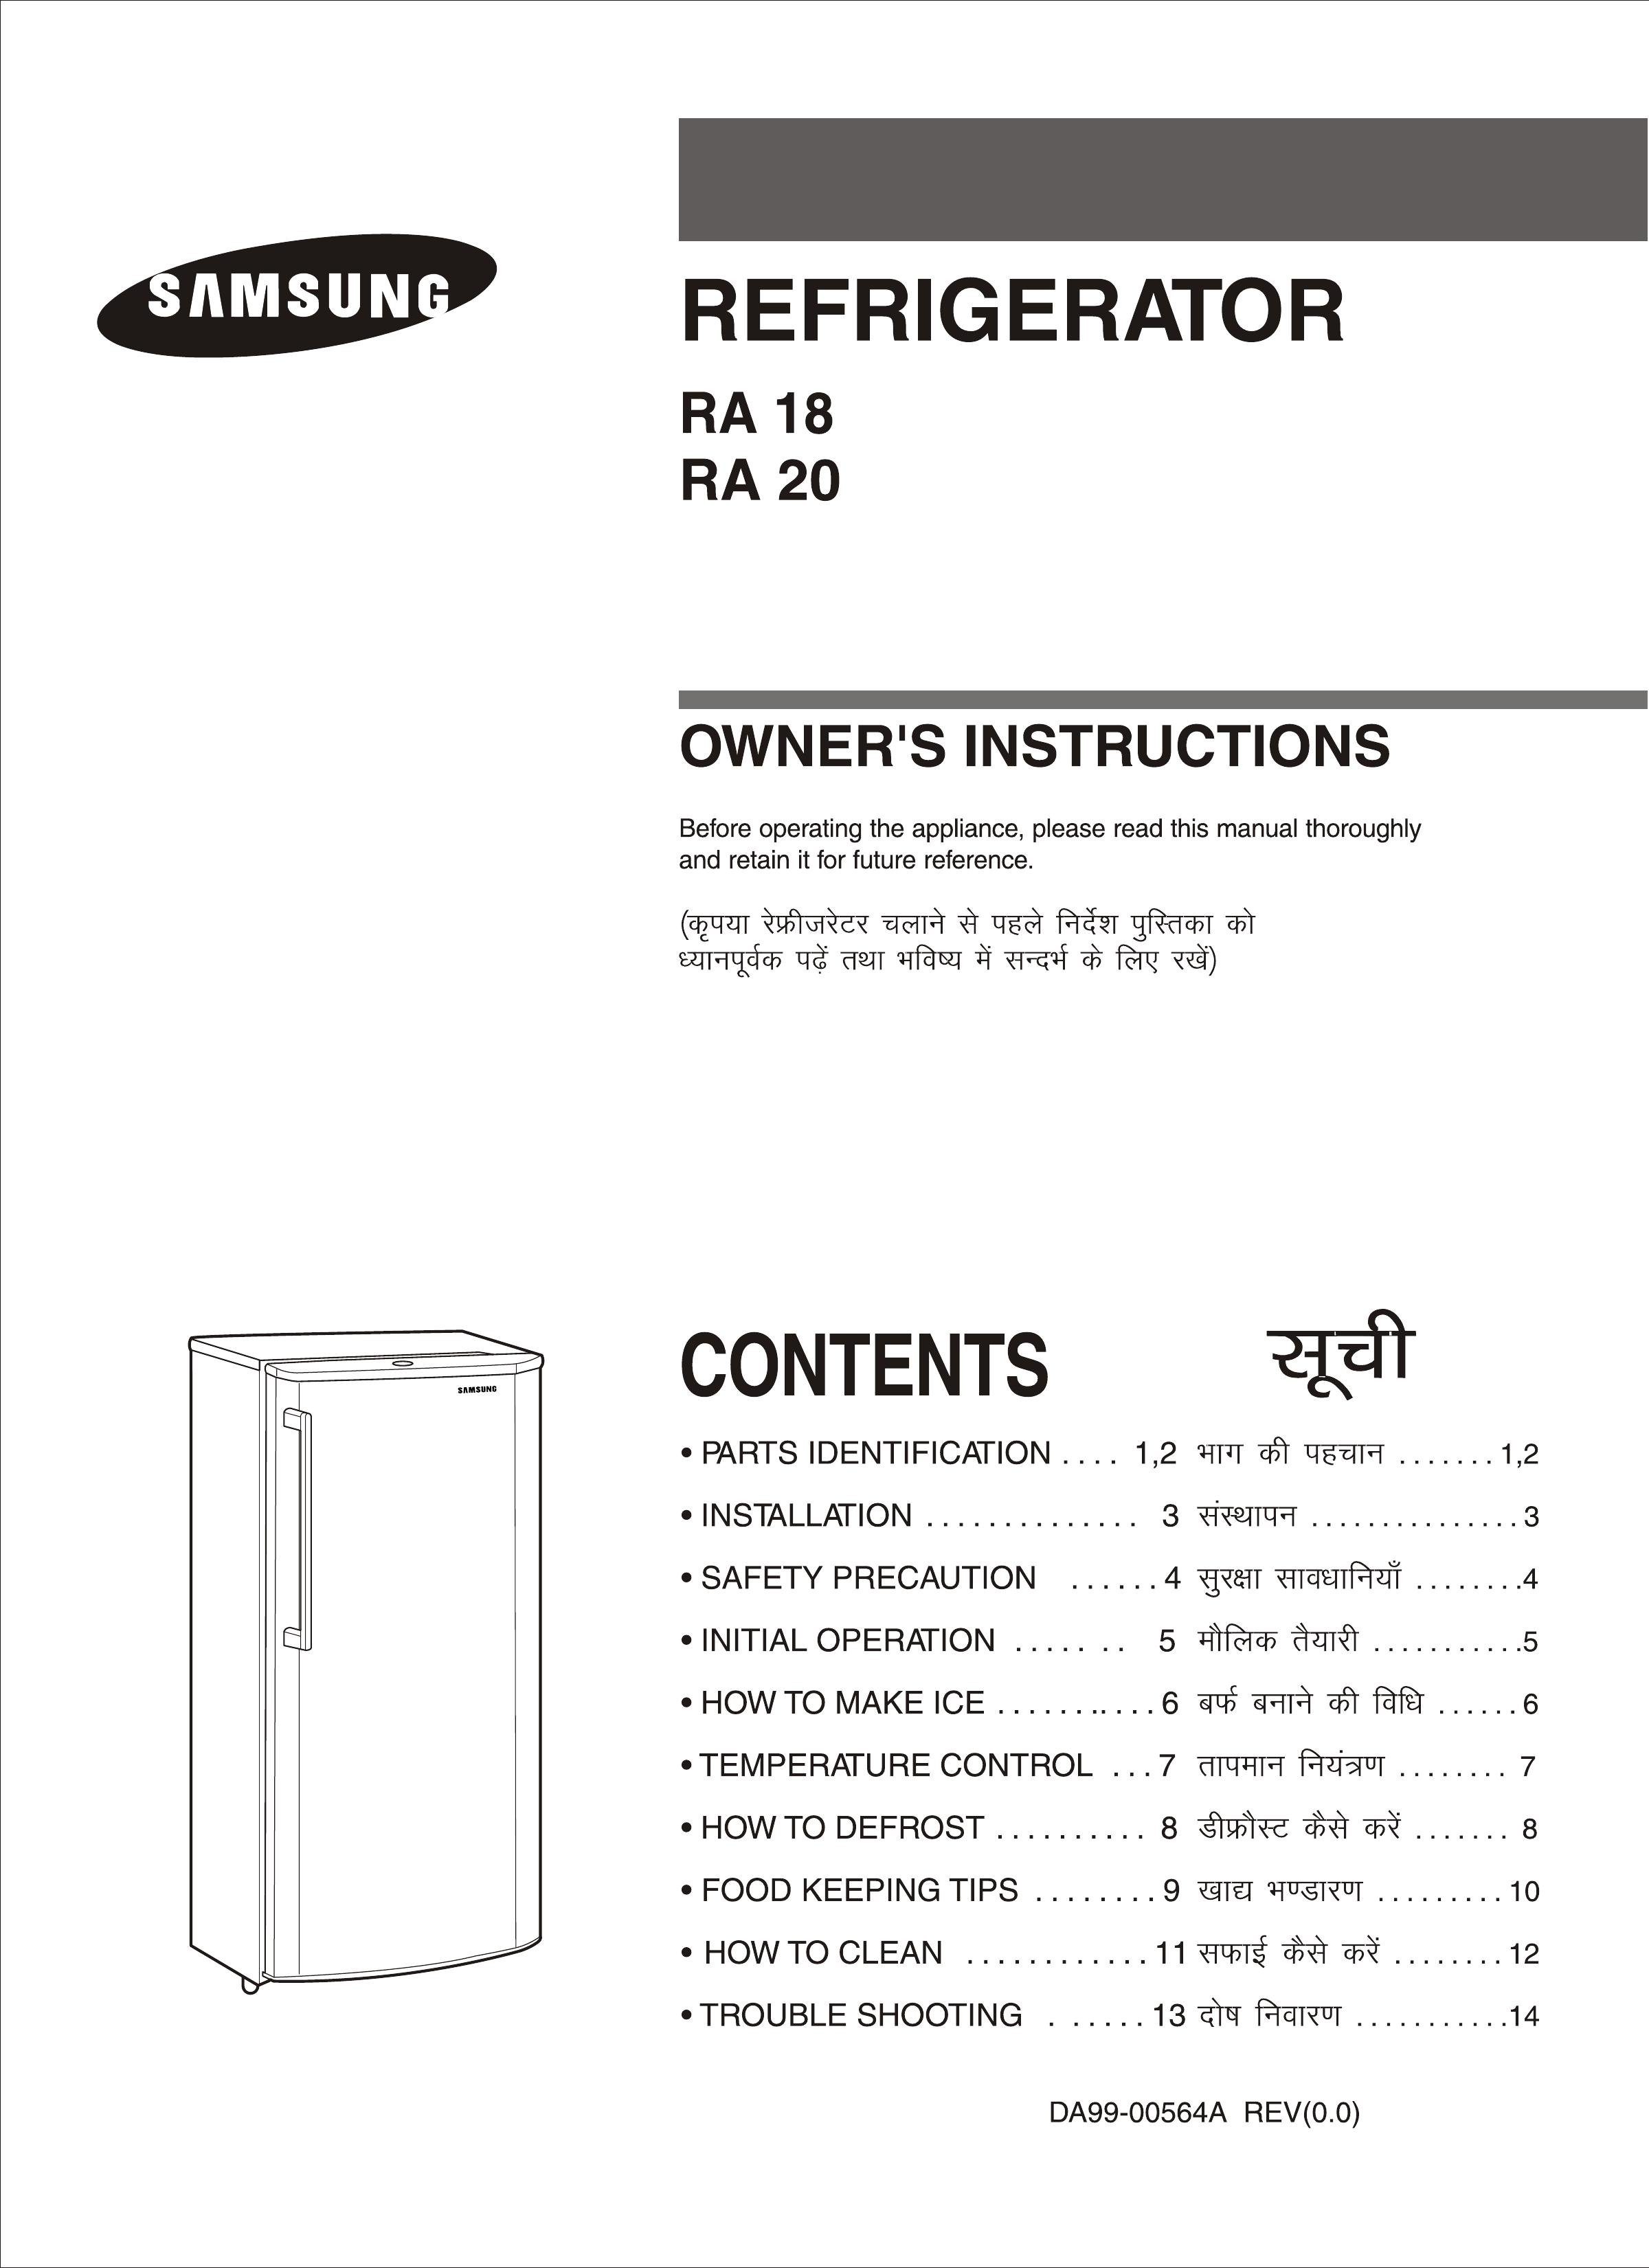 Samsung RA 18 Refrigerator User Manual